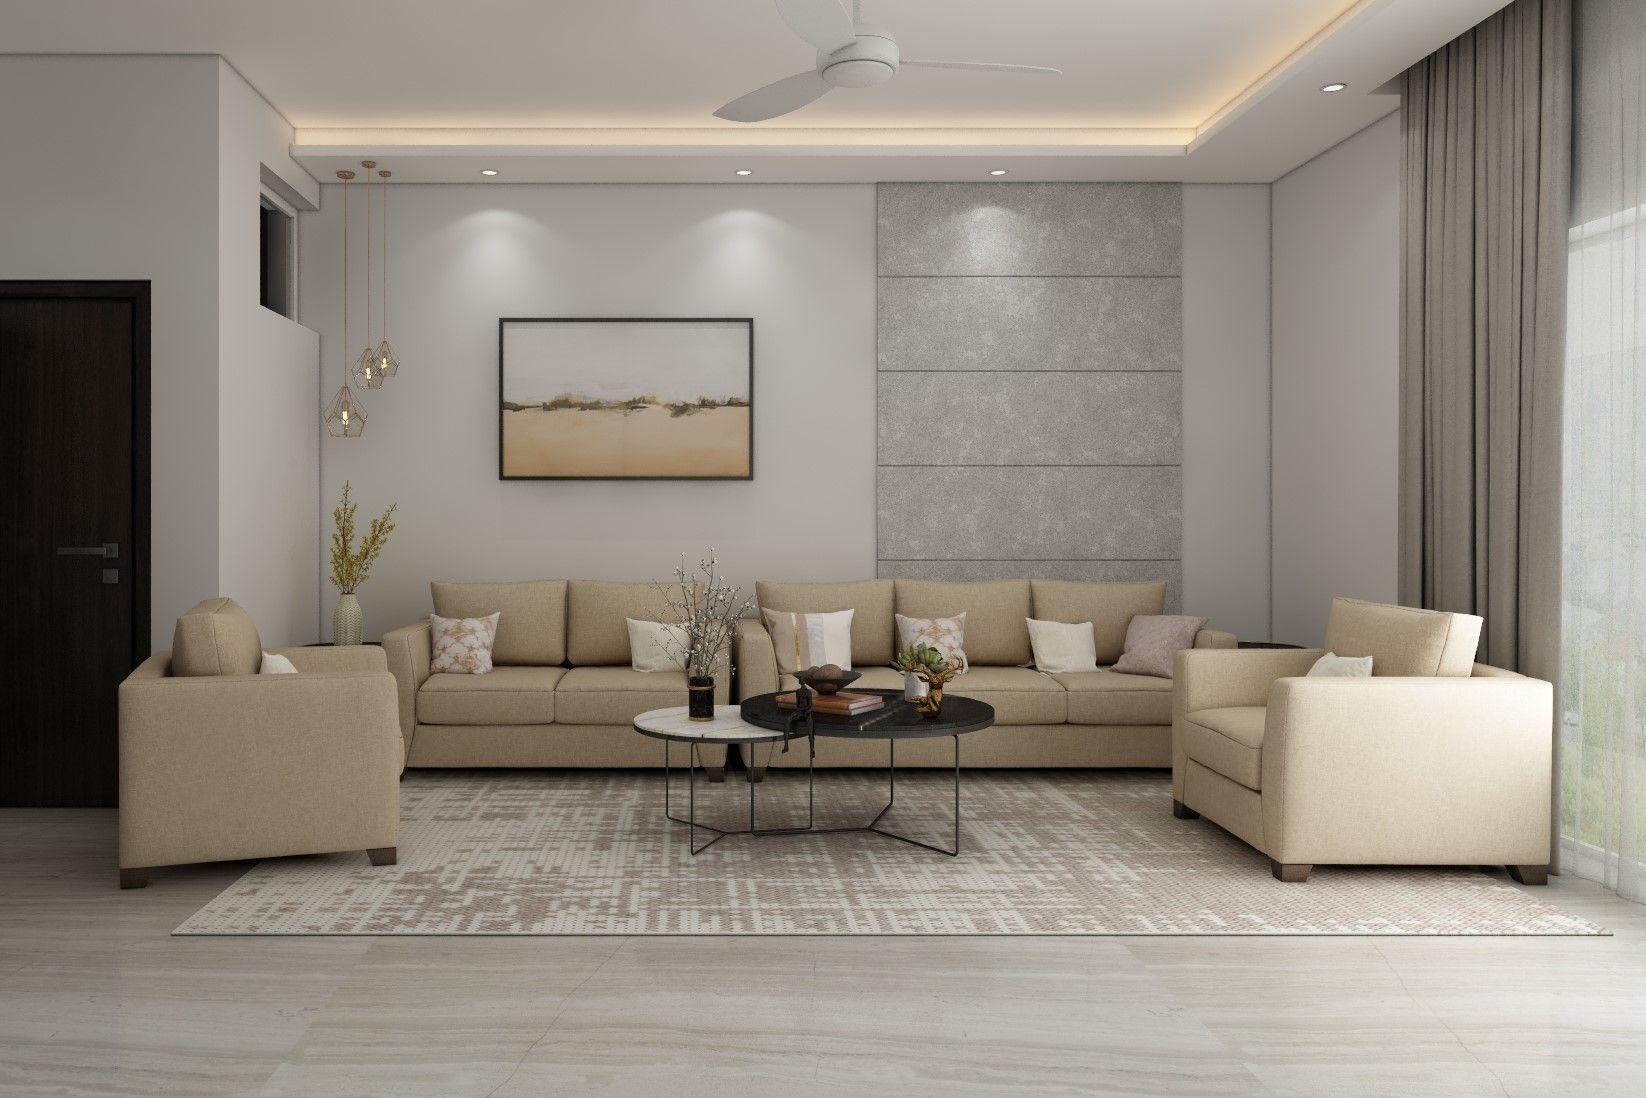 Modern Living Room Design With 3 Beige Upholstered Sofas